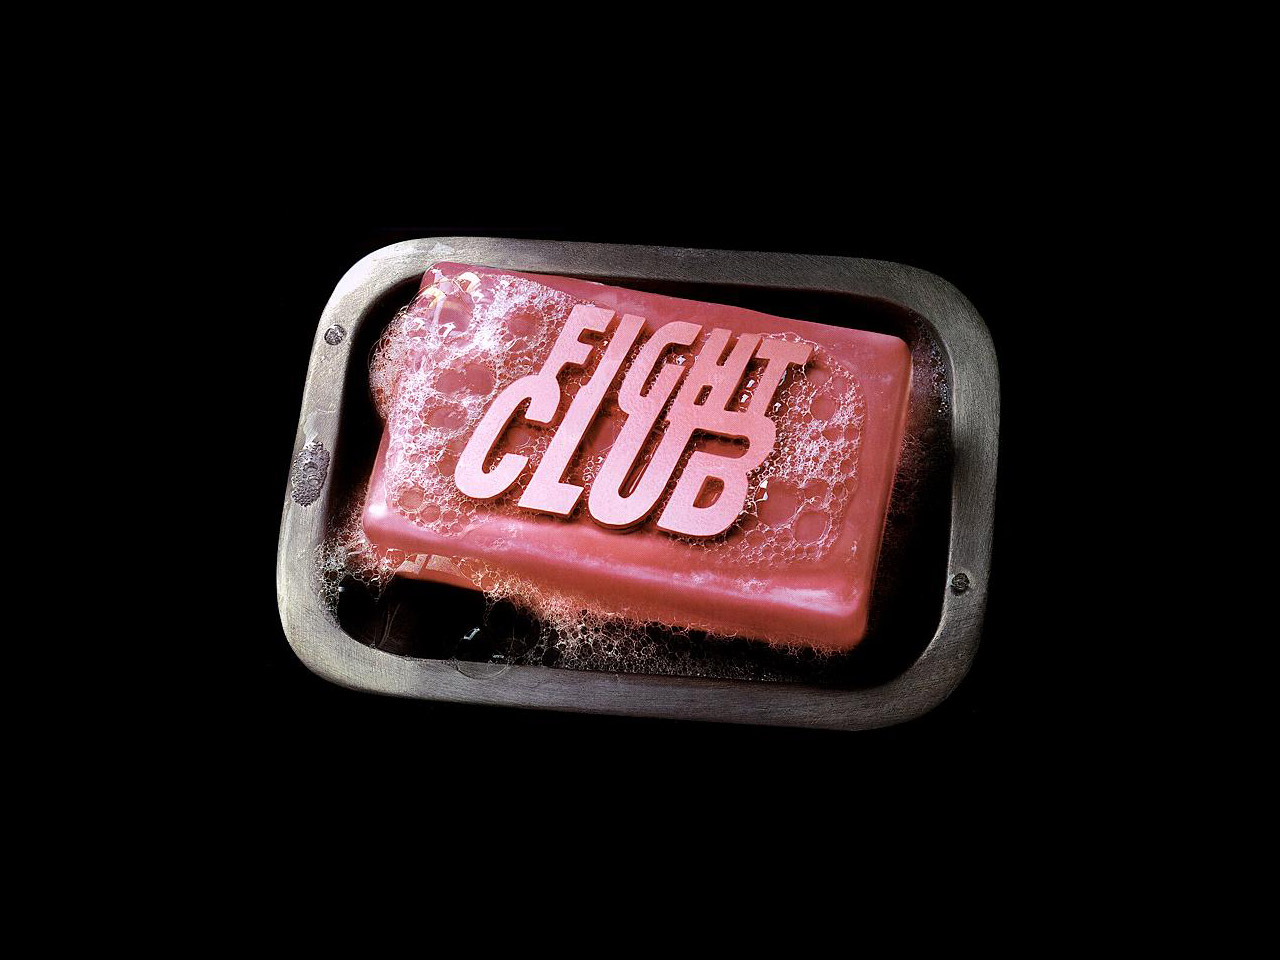 fight club, movie